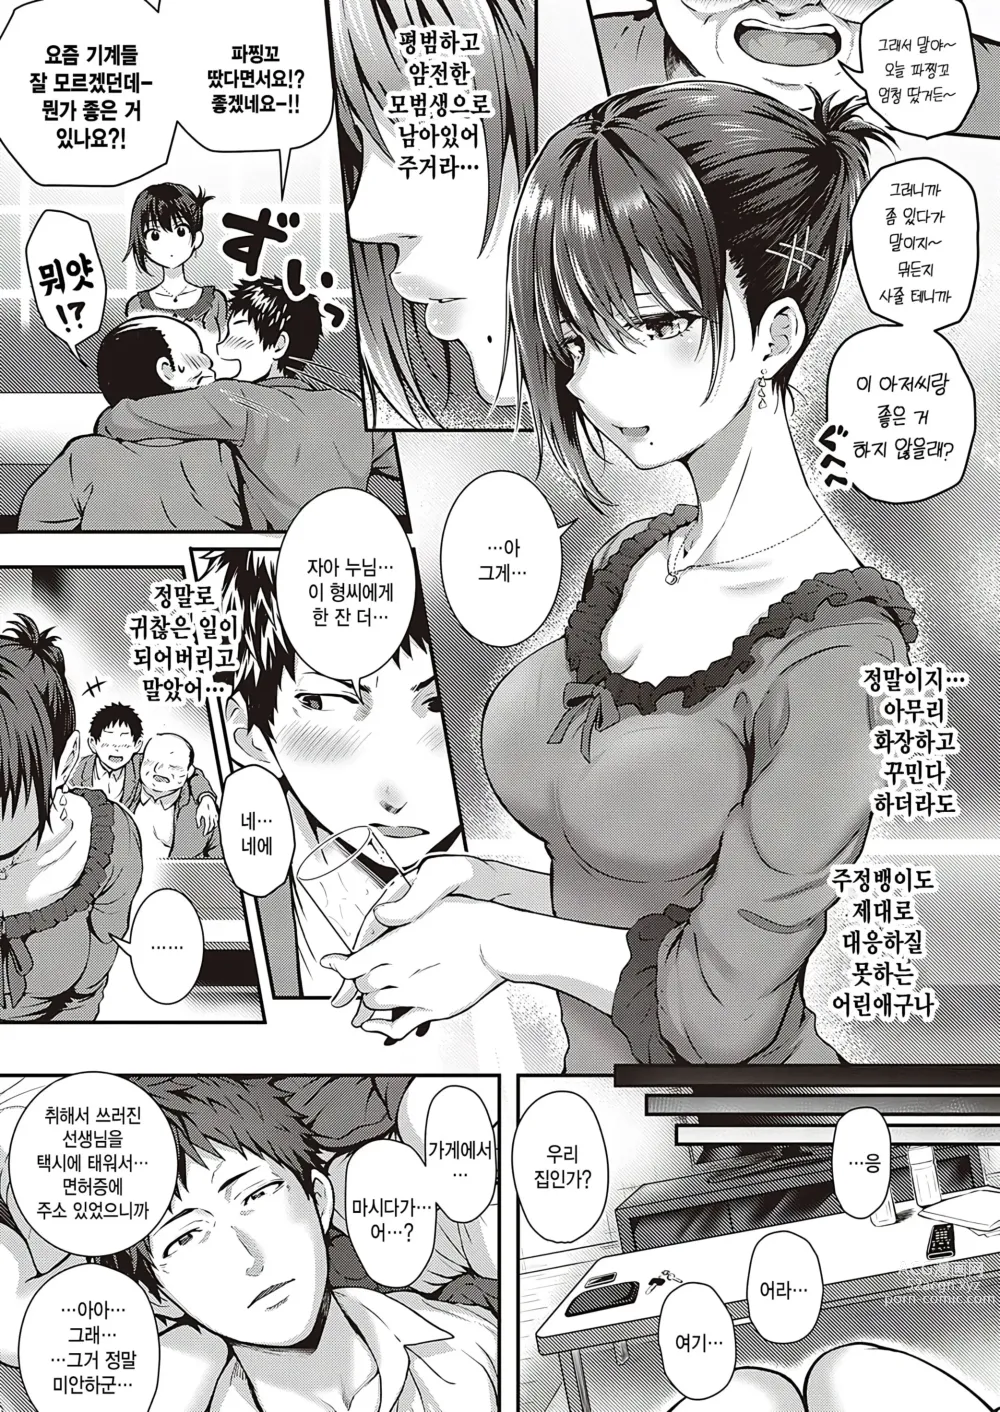 Page 5 of manga Bad apple...?